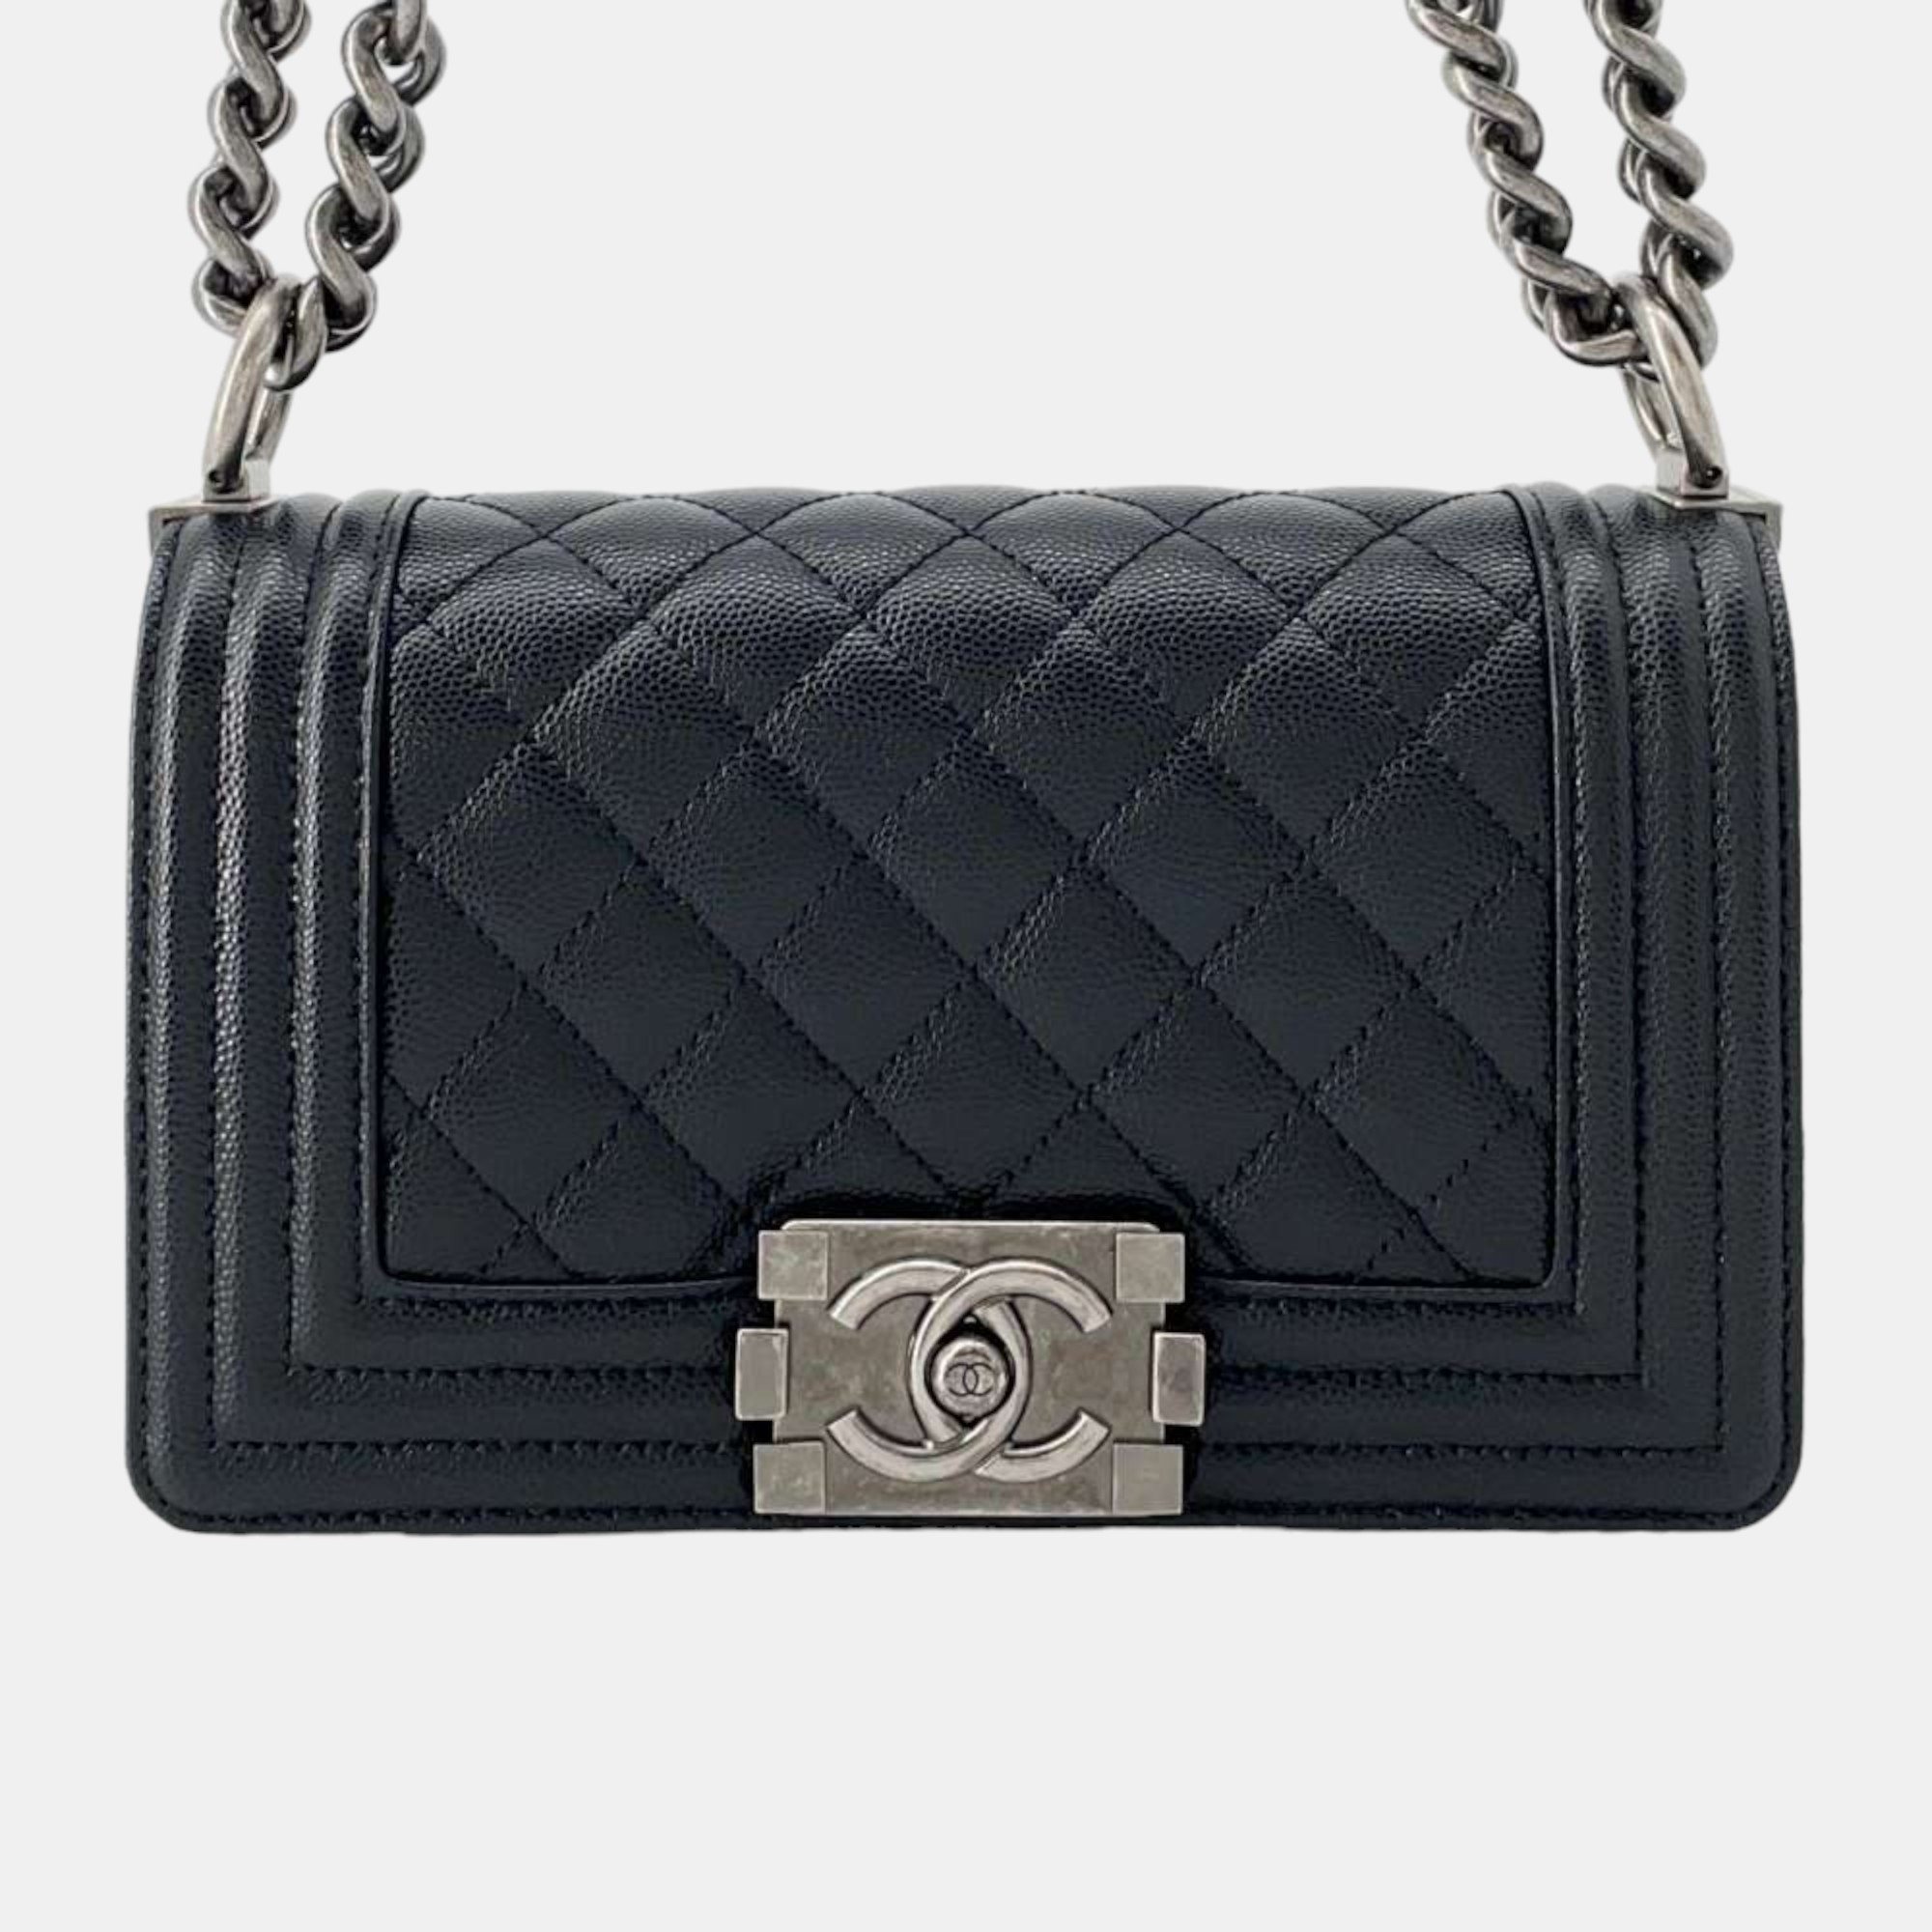 Chanel black caviar leather small boy shoulder bag